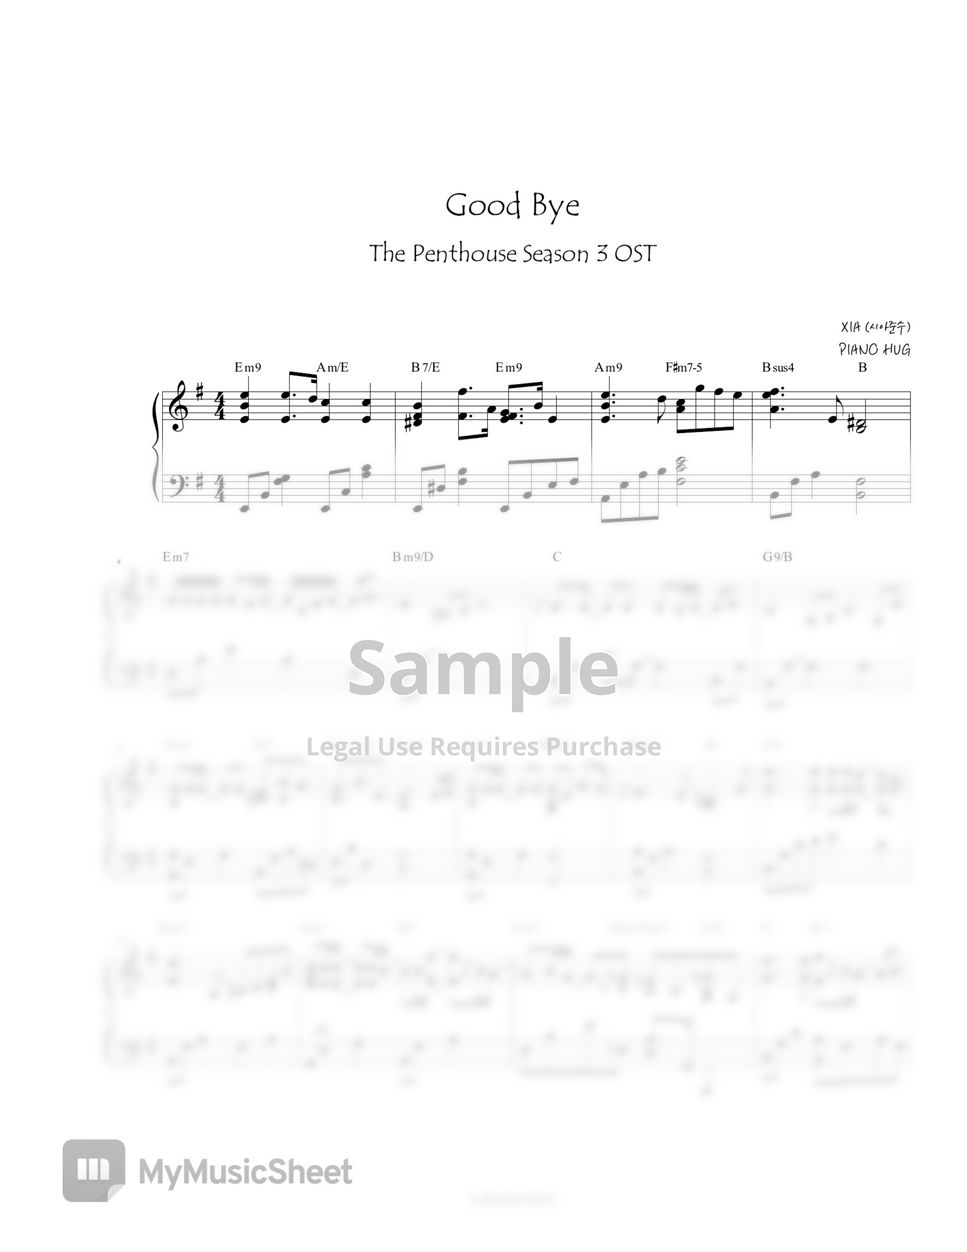 XIA - Good Bye (The Penthouse Season 3 OST) by Piano Hug